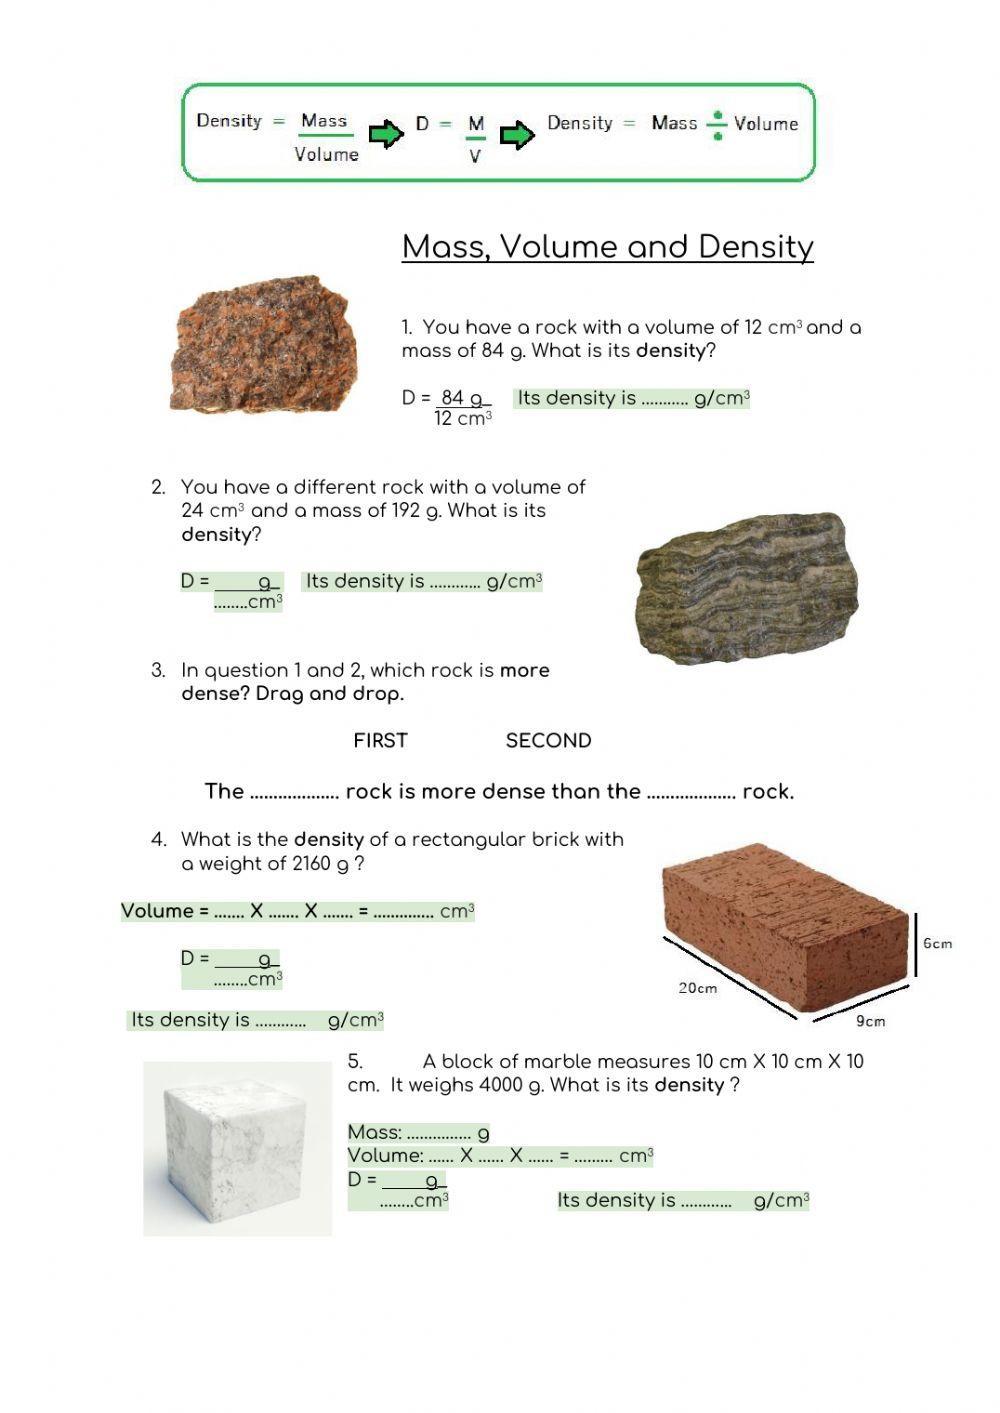 Mass, volume and density